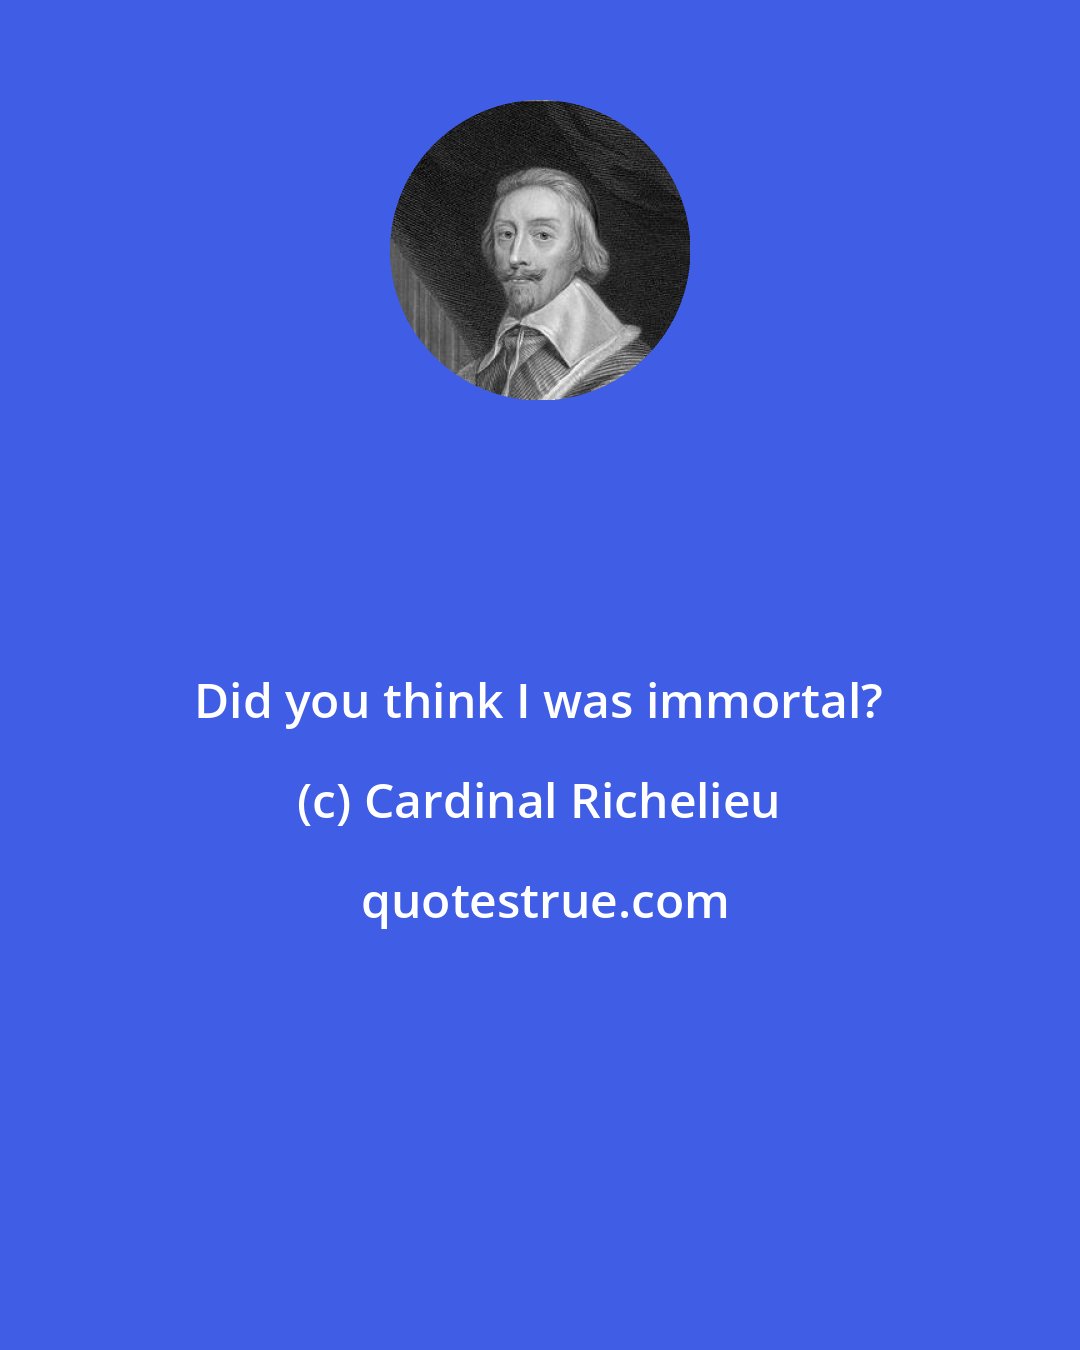 Cardinal Richelieu: Did you think I was immortal?